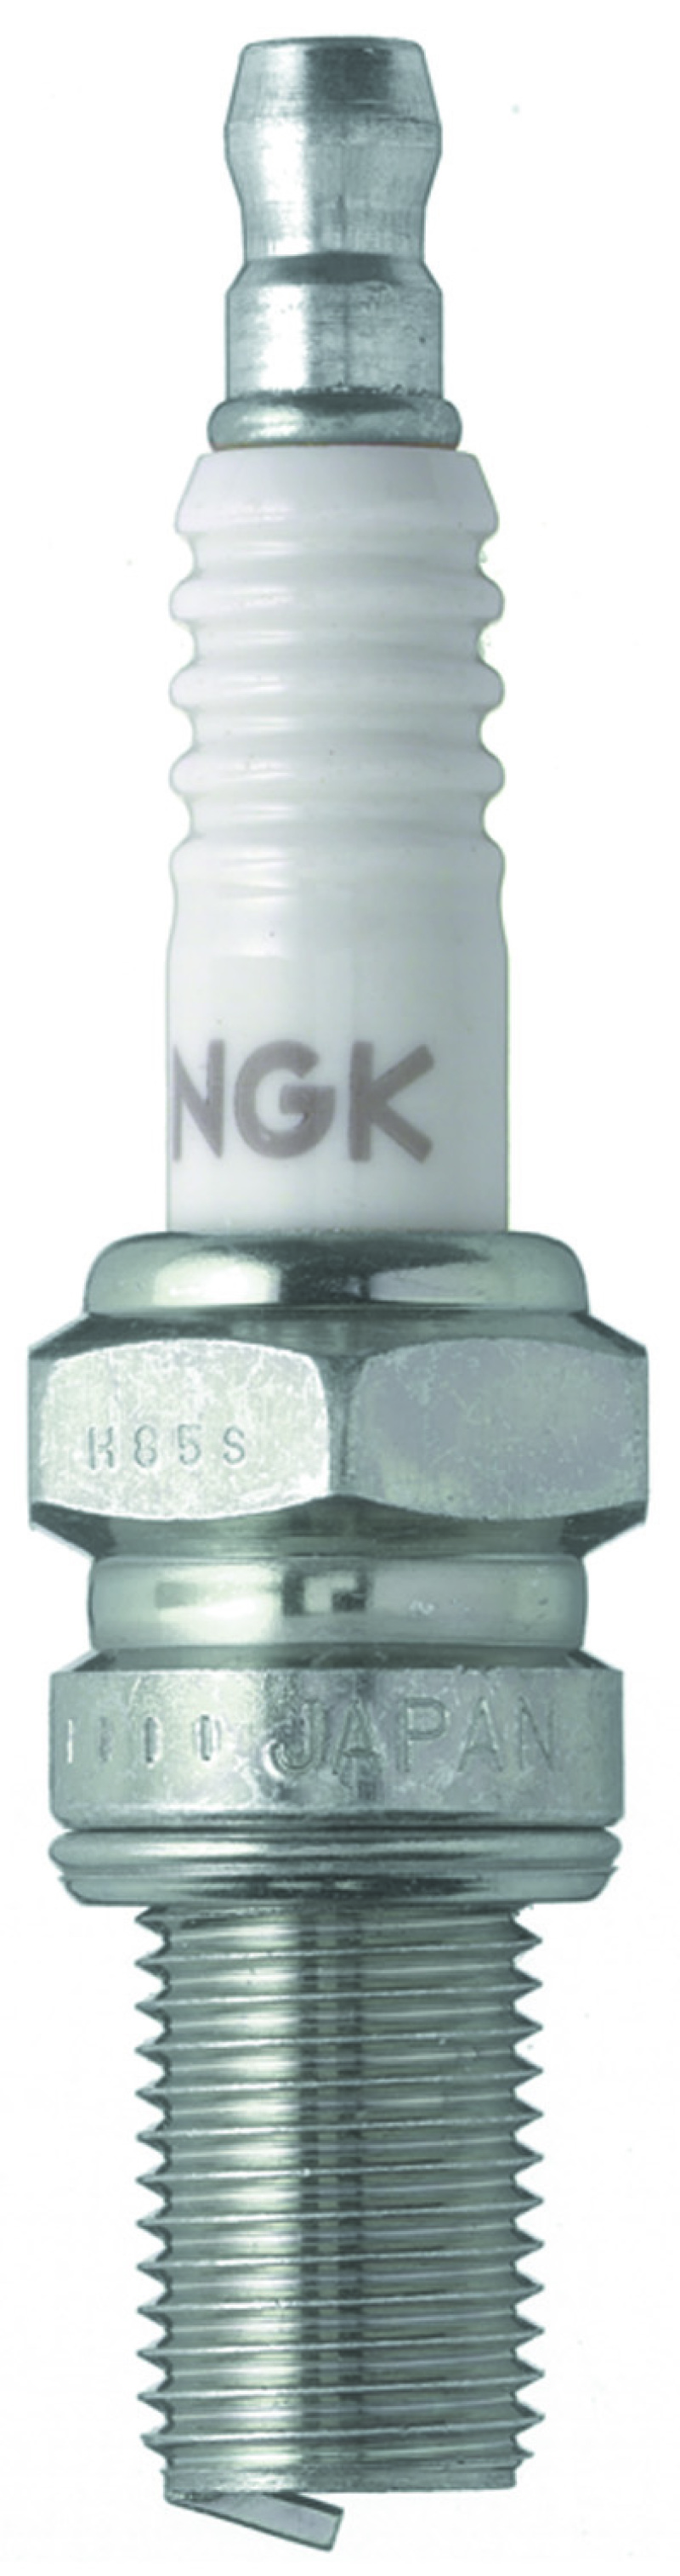 NGK Racing Spark Plugs Platinum Box of 4 (R2525-10) - 5281